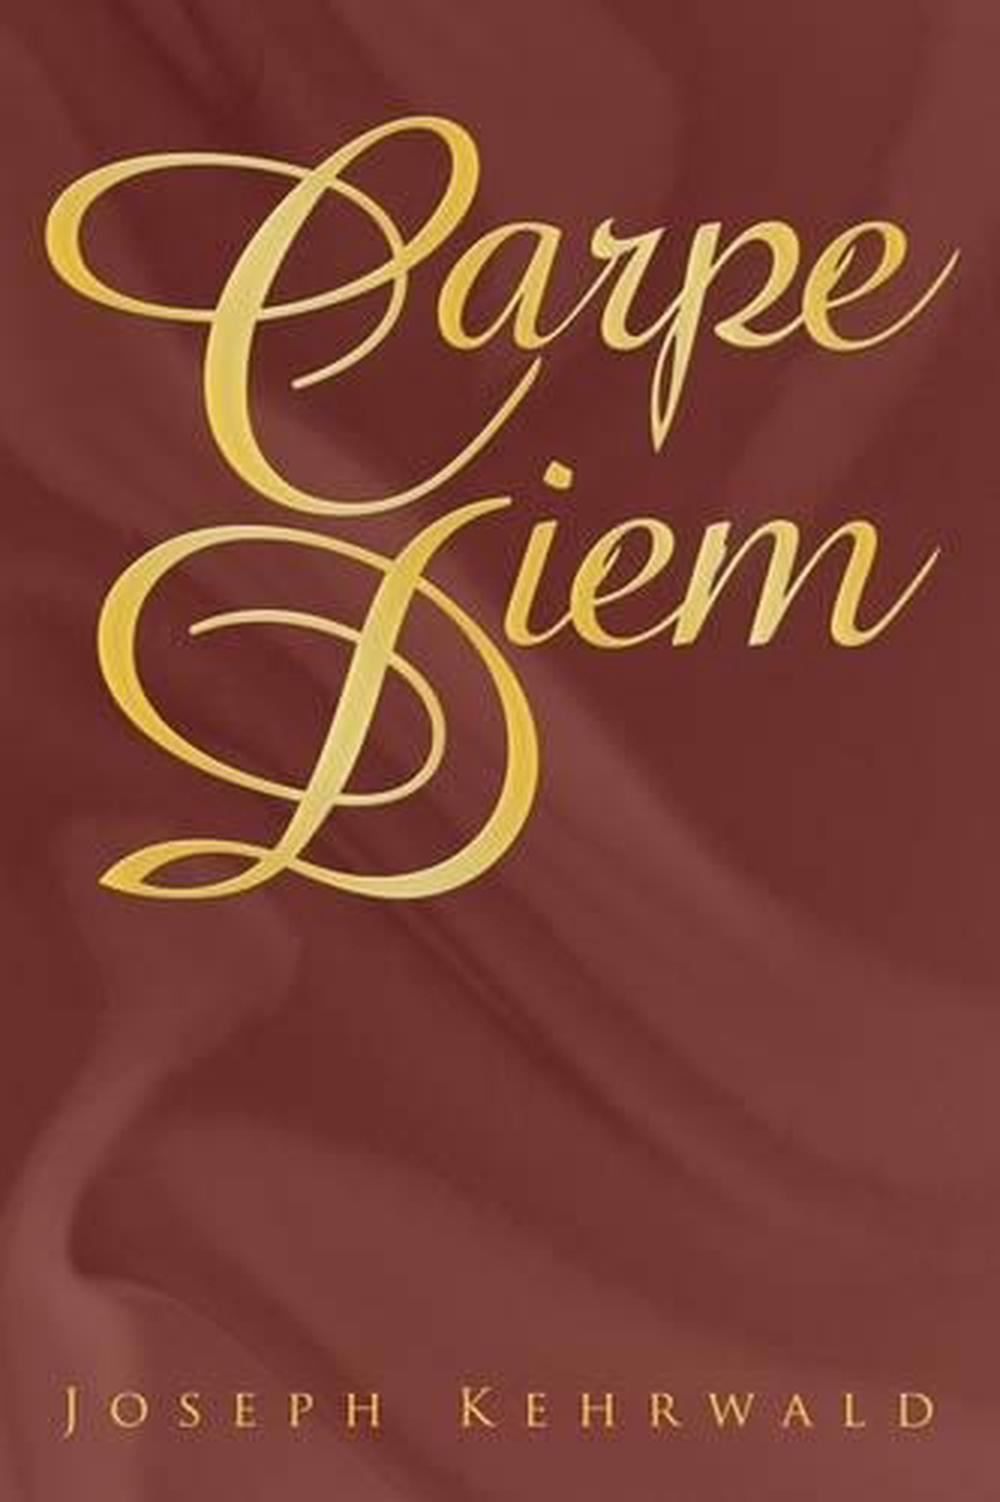 meaning of carpe diem in english